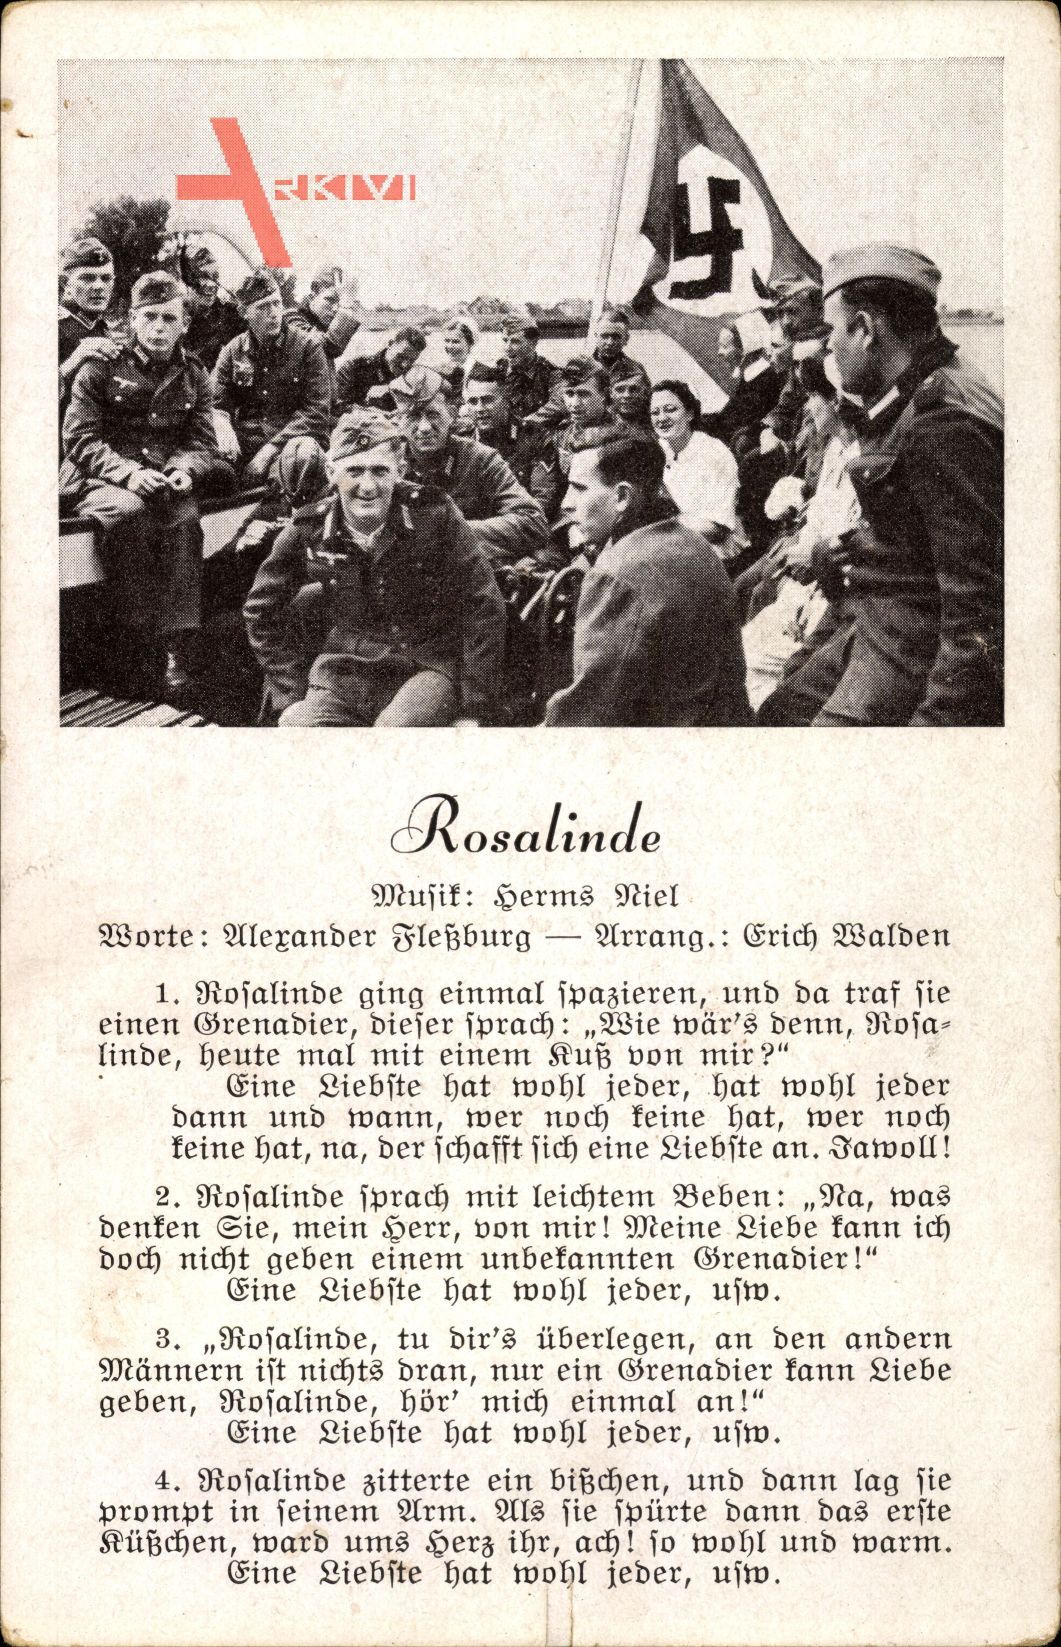 Lied Rosalinde, Wehrmachtssoldaten, Herms Niel, Alexander Fleßburg